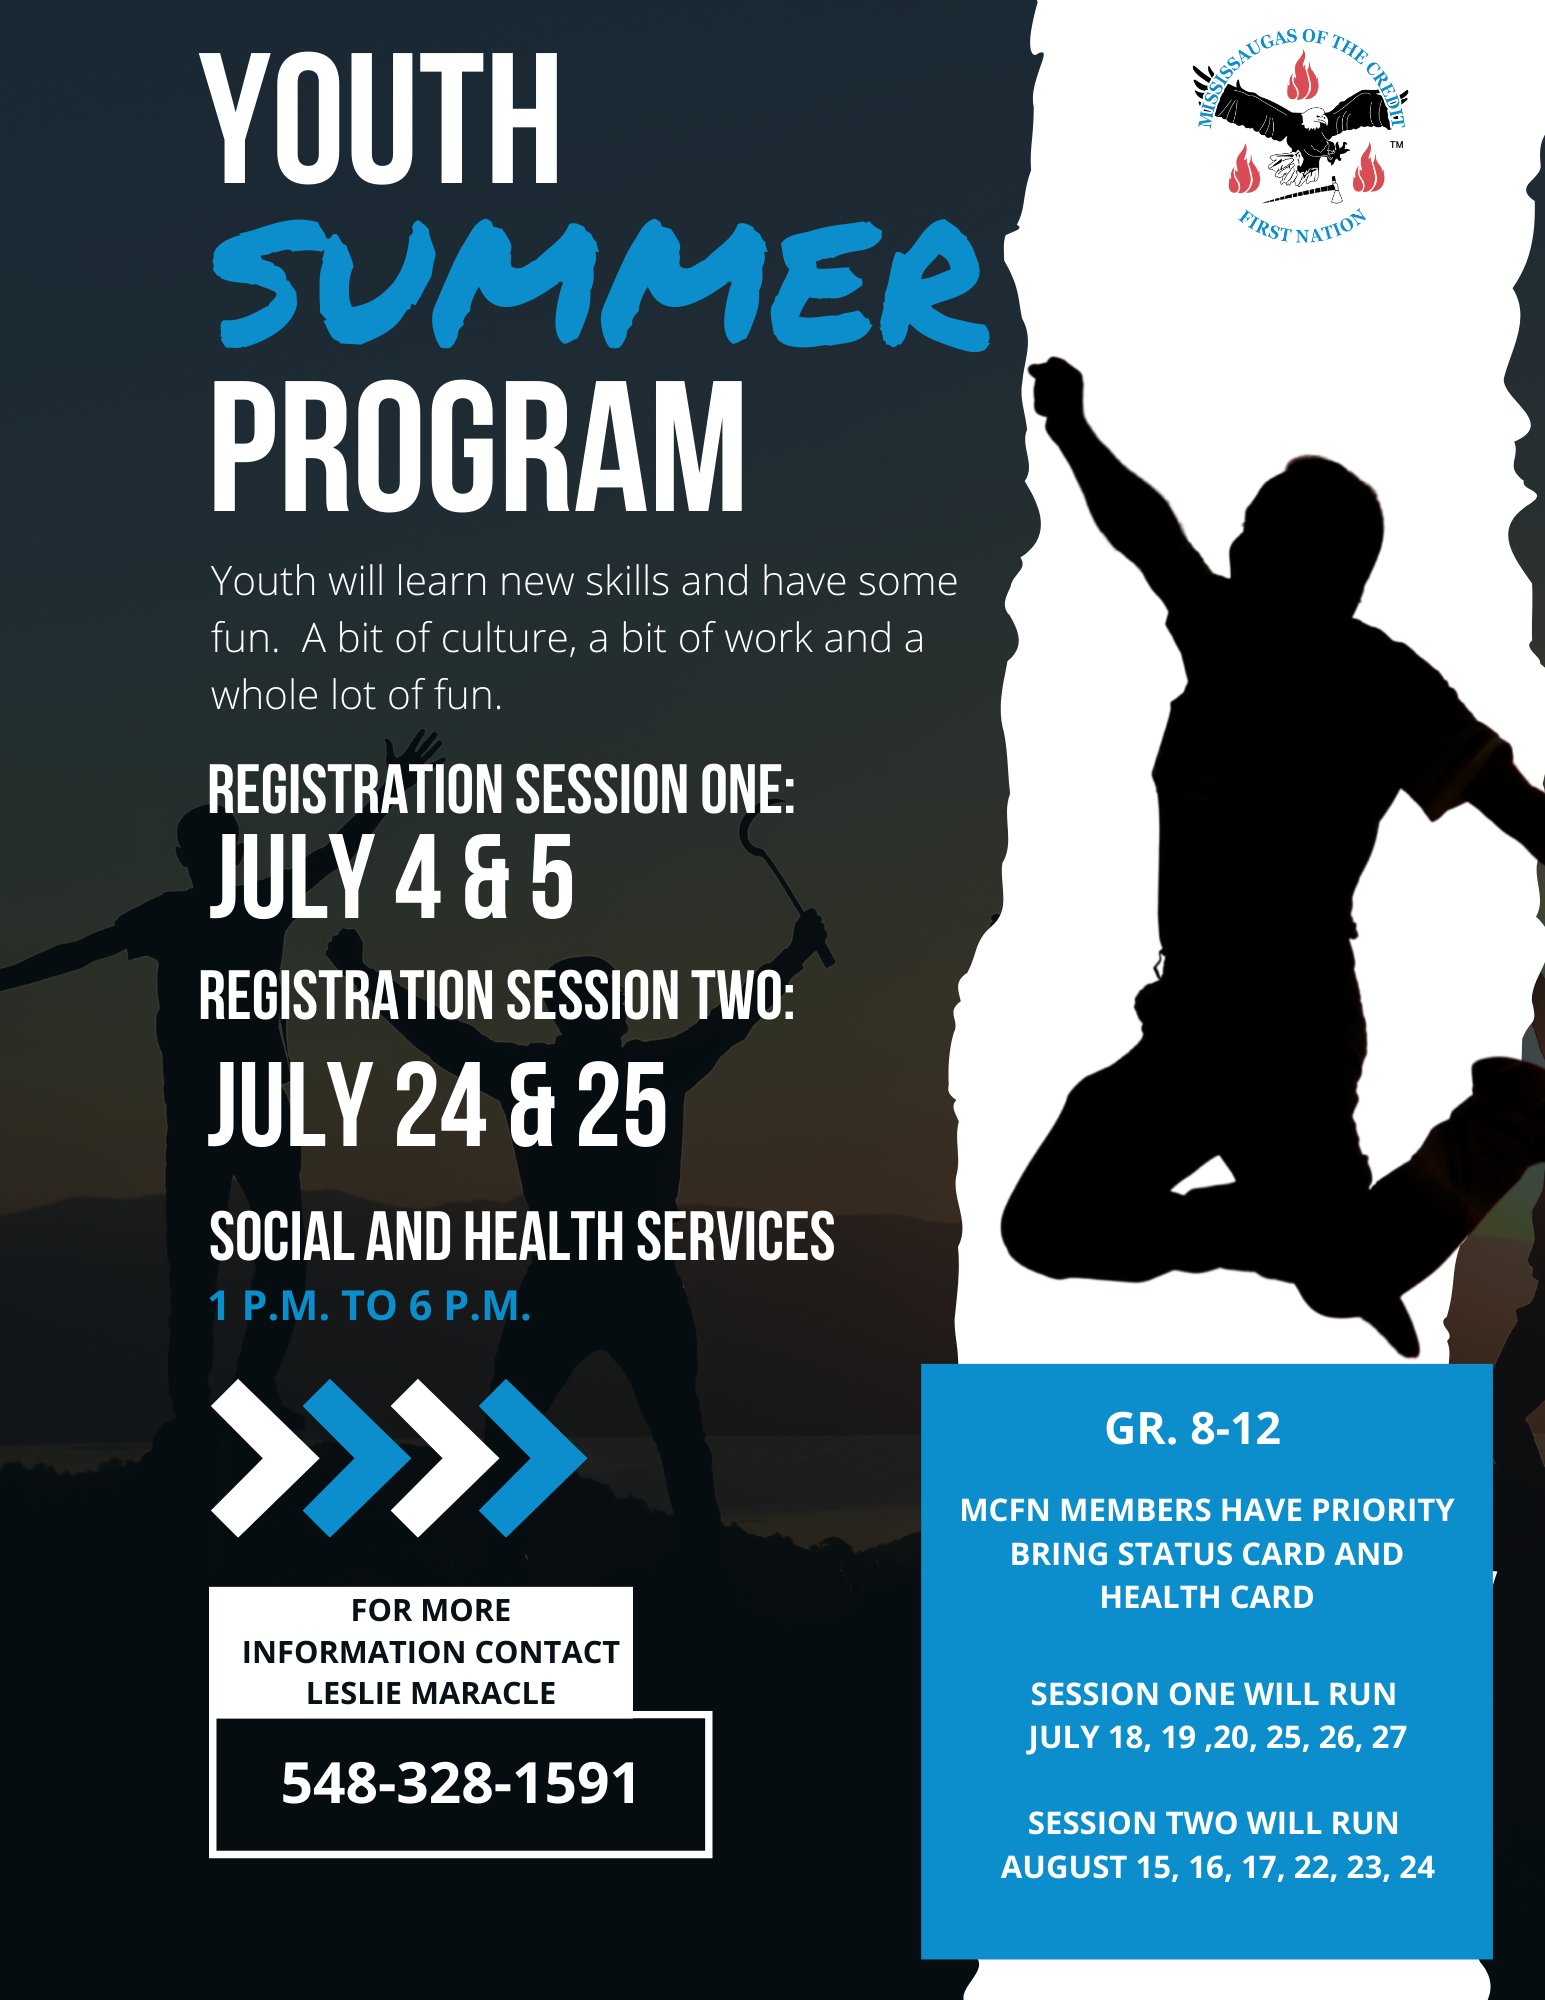 Youth Summer Program